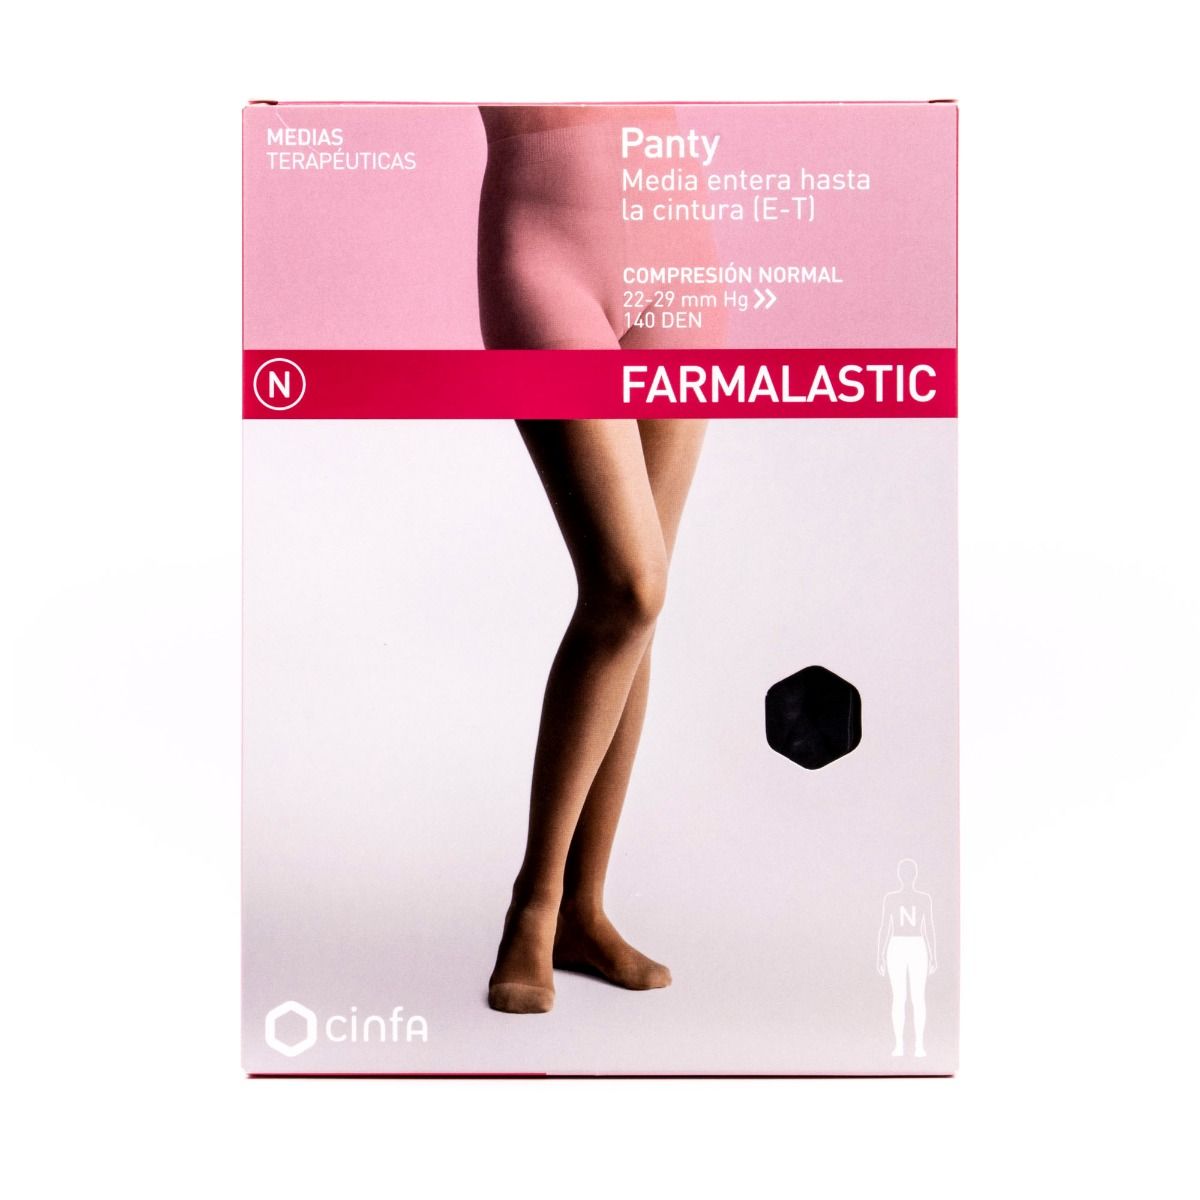 Farmalastic Panty Media Compresión Normal 140 DEN Negro Talla M